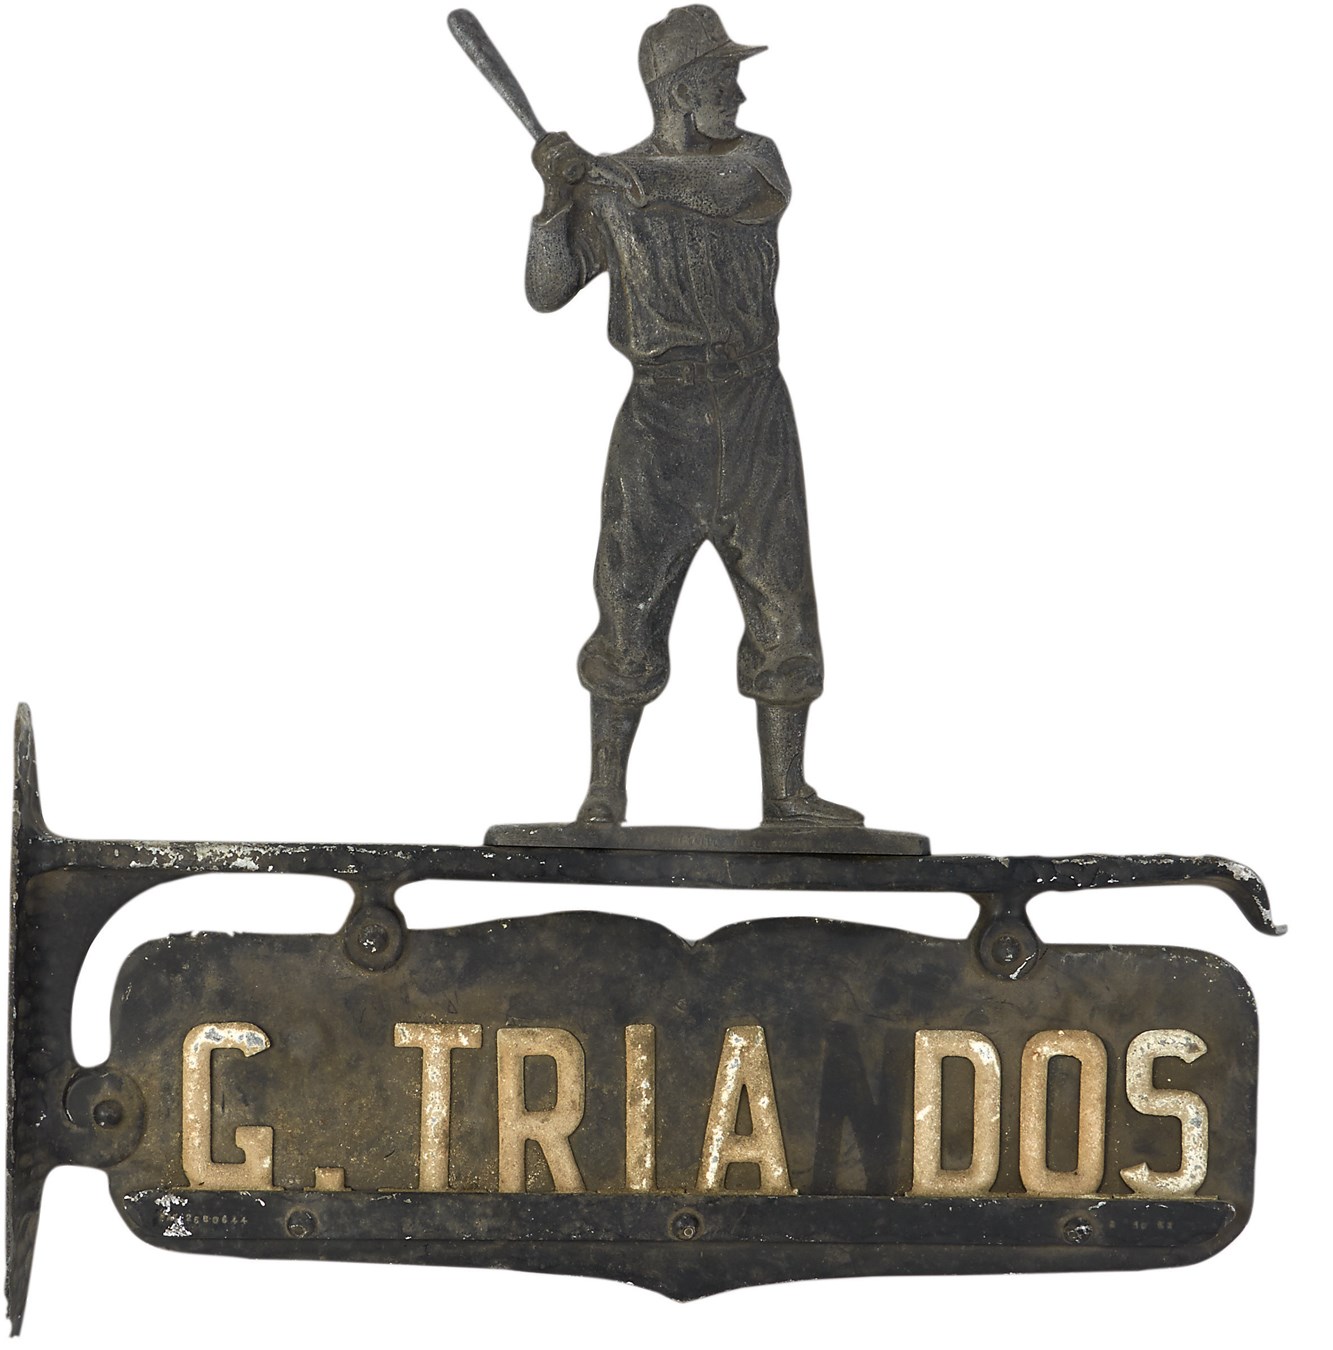 Stadium Artifacts - Gus Triandos House Sign